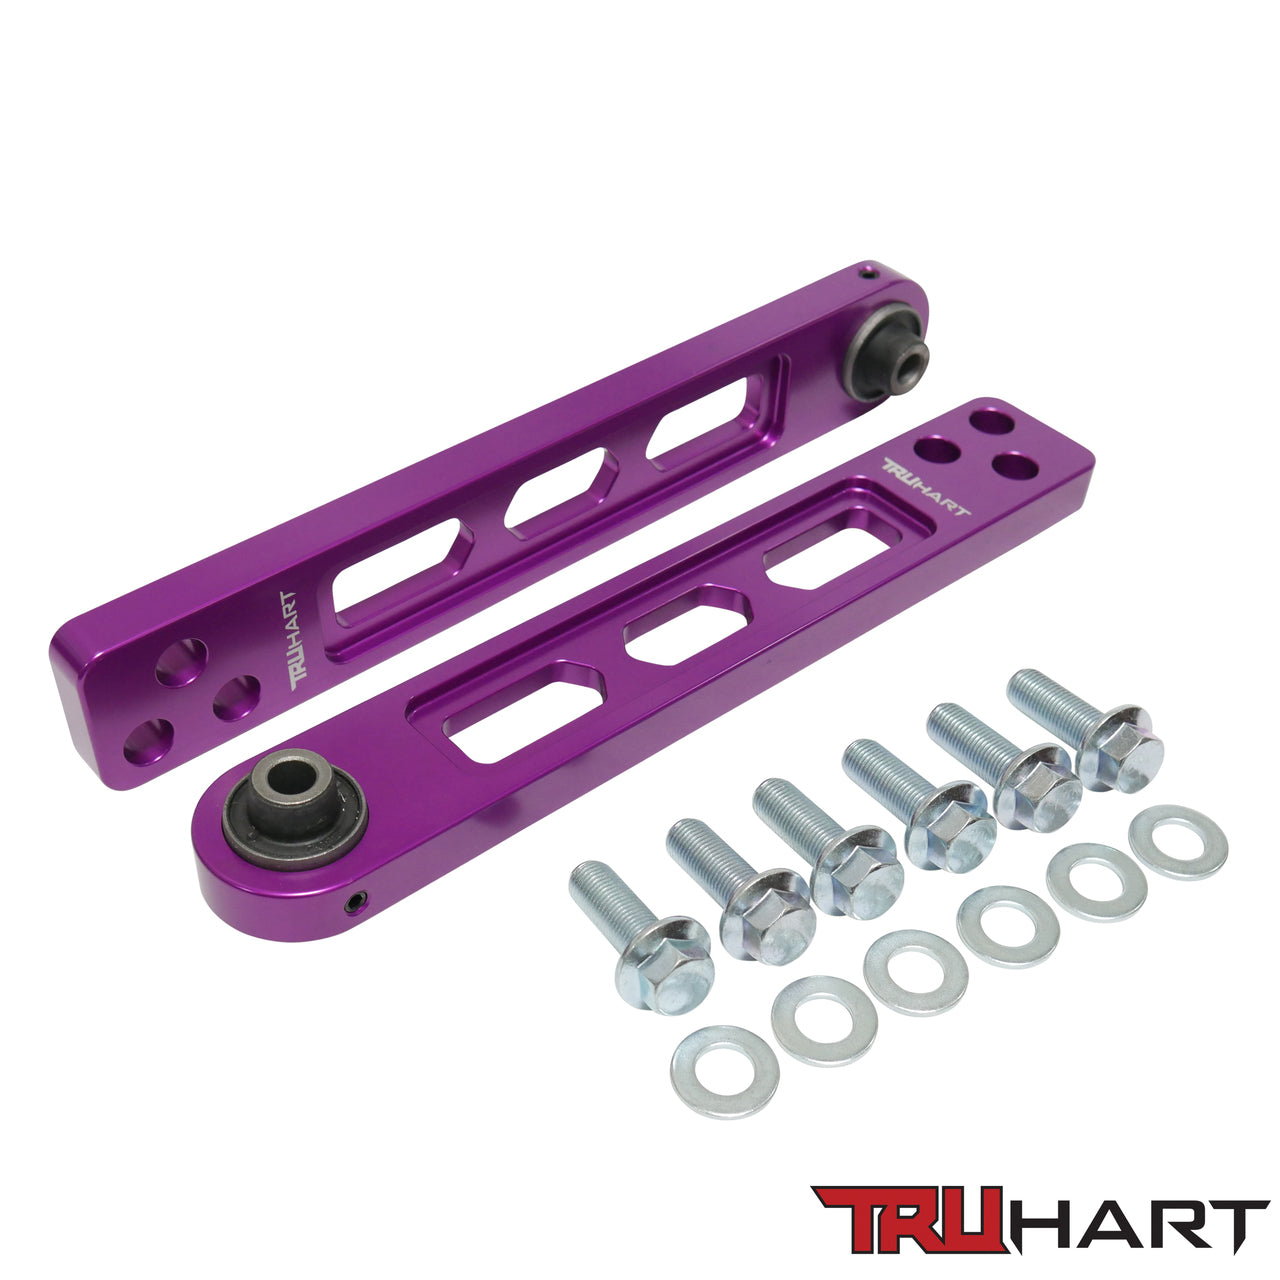 TruHart Rear Lower Control Arms - Purple 02-06 Acura RSX / 03-07 Honda Element - TH-H103-PU